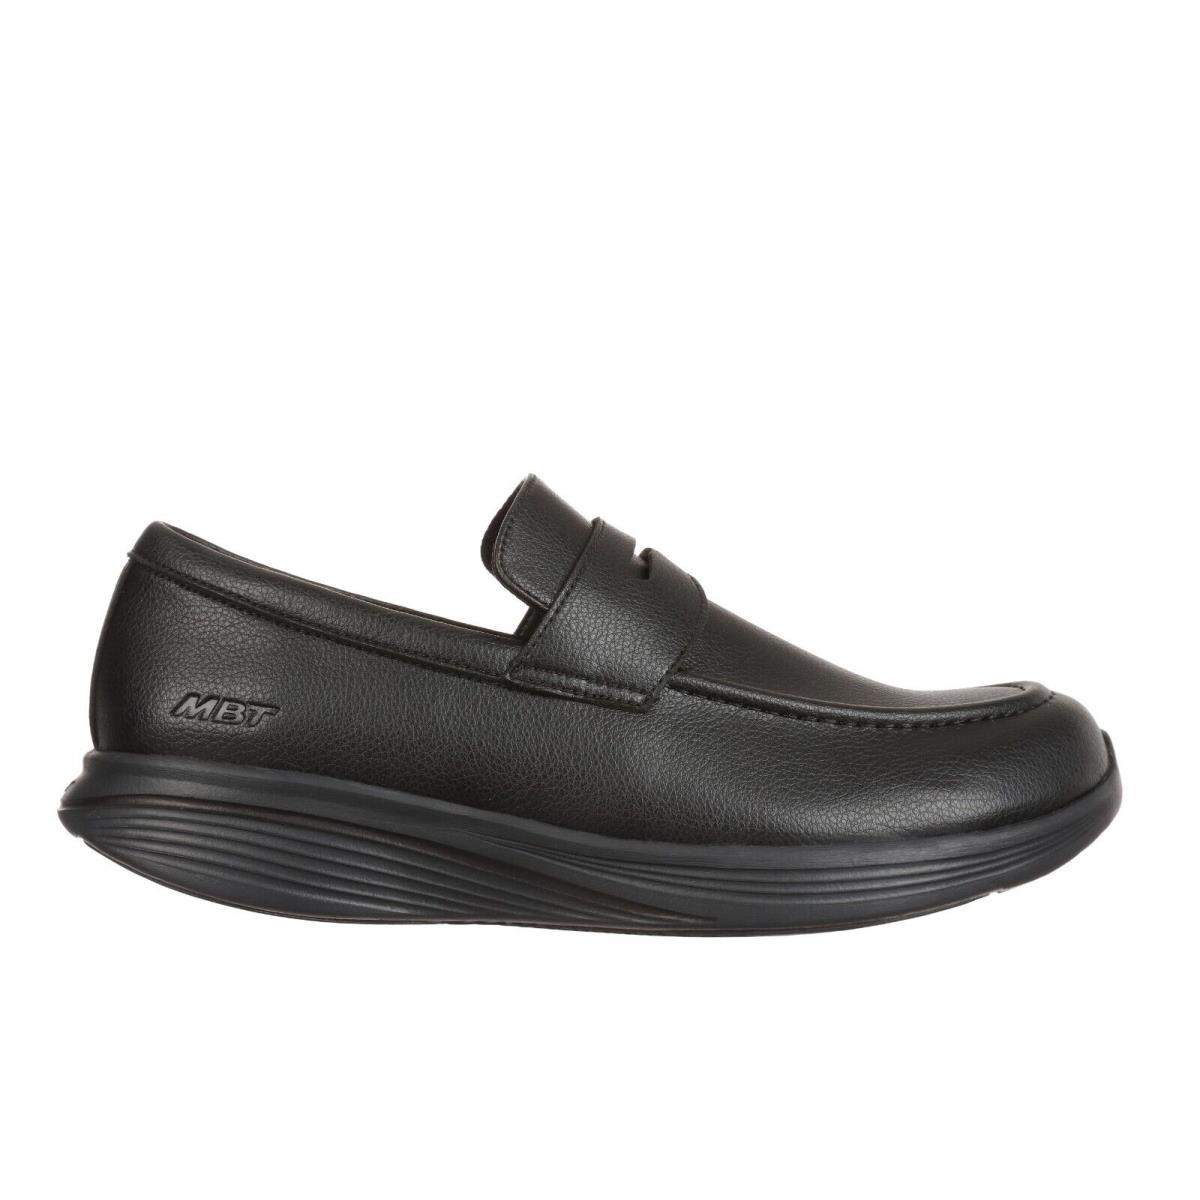 Mbt Loafer Slip-on Casual Dress Shoe Boston Vinci Lofa 3 Styles Lofa-Black Synthetic Leather